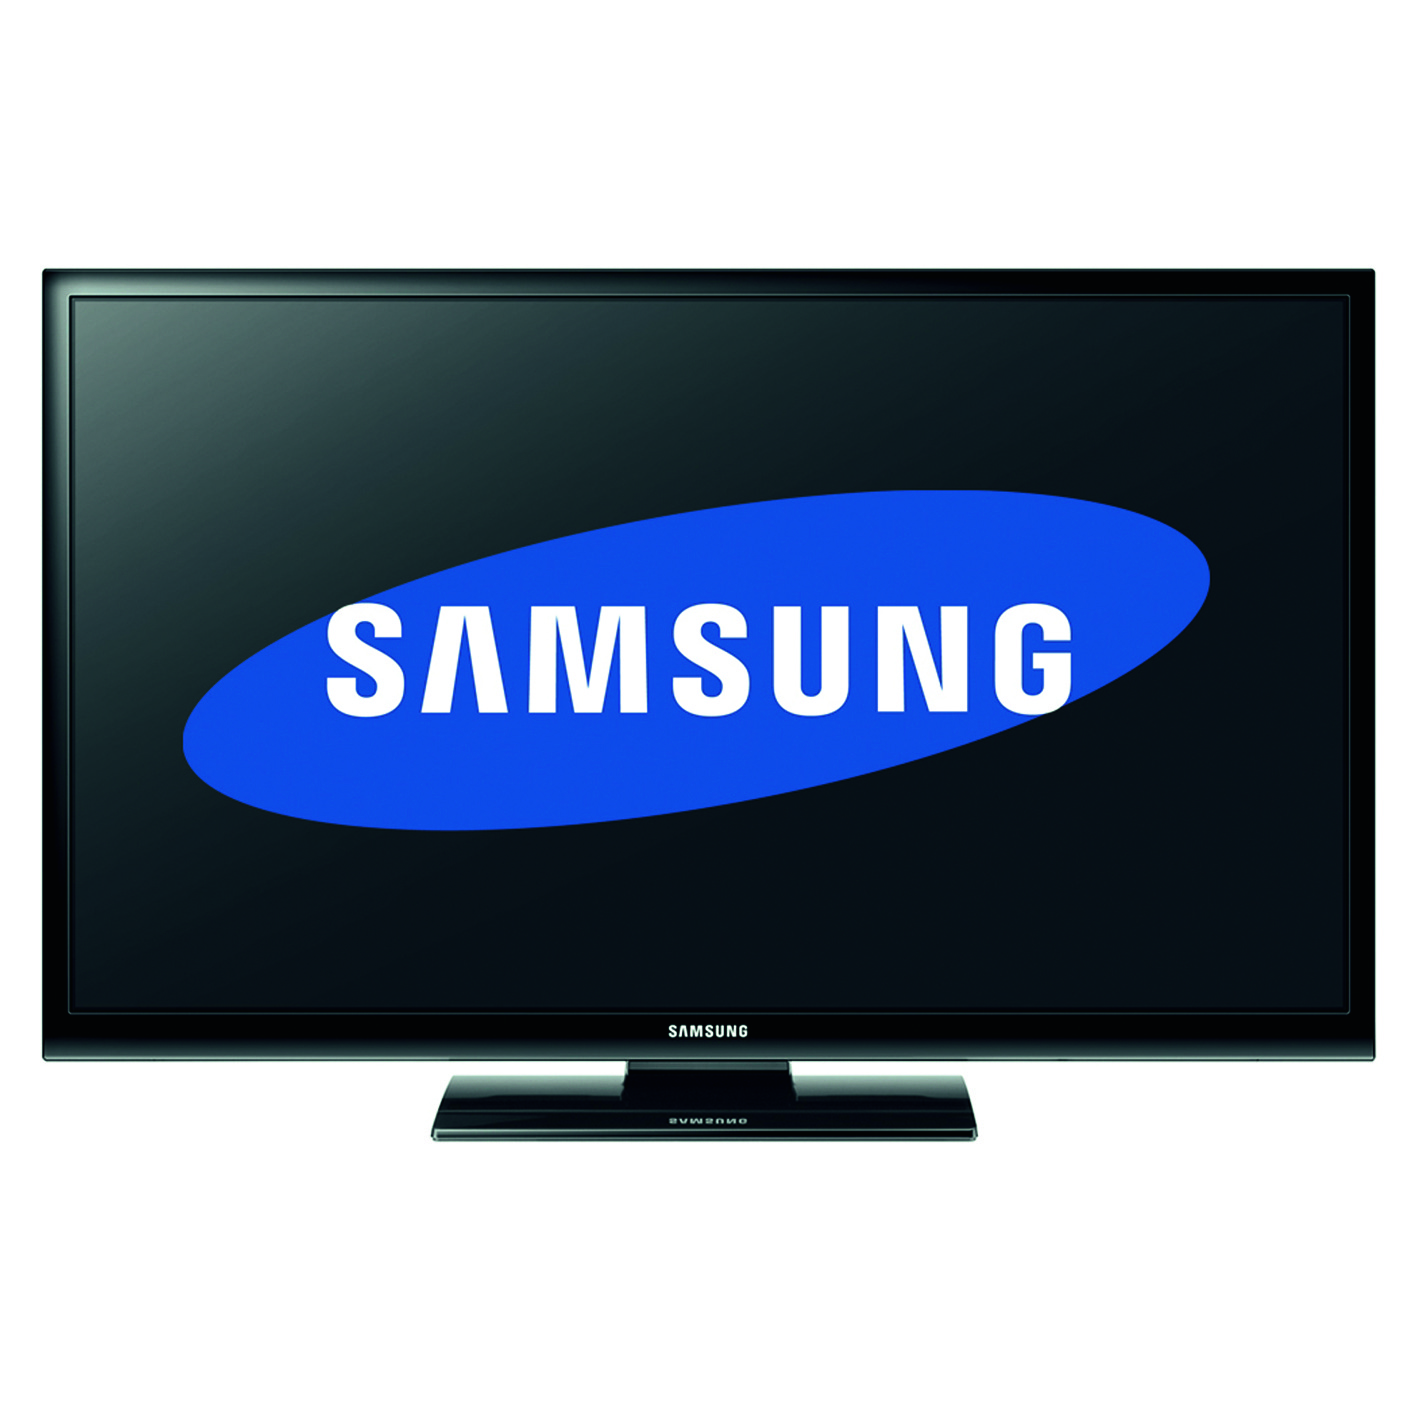 SAMSUNG TV - TELEVISION